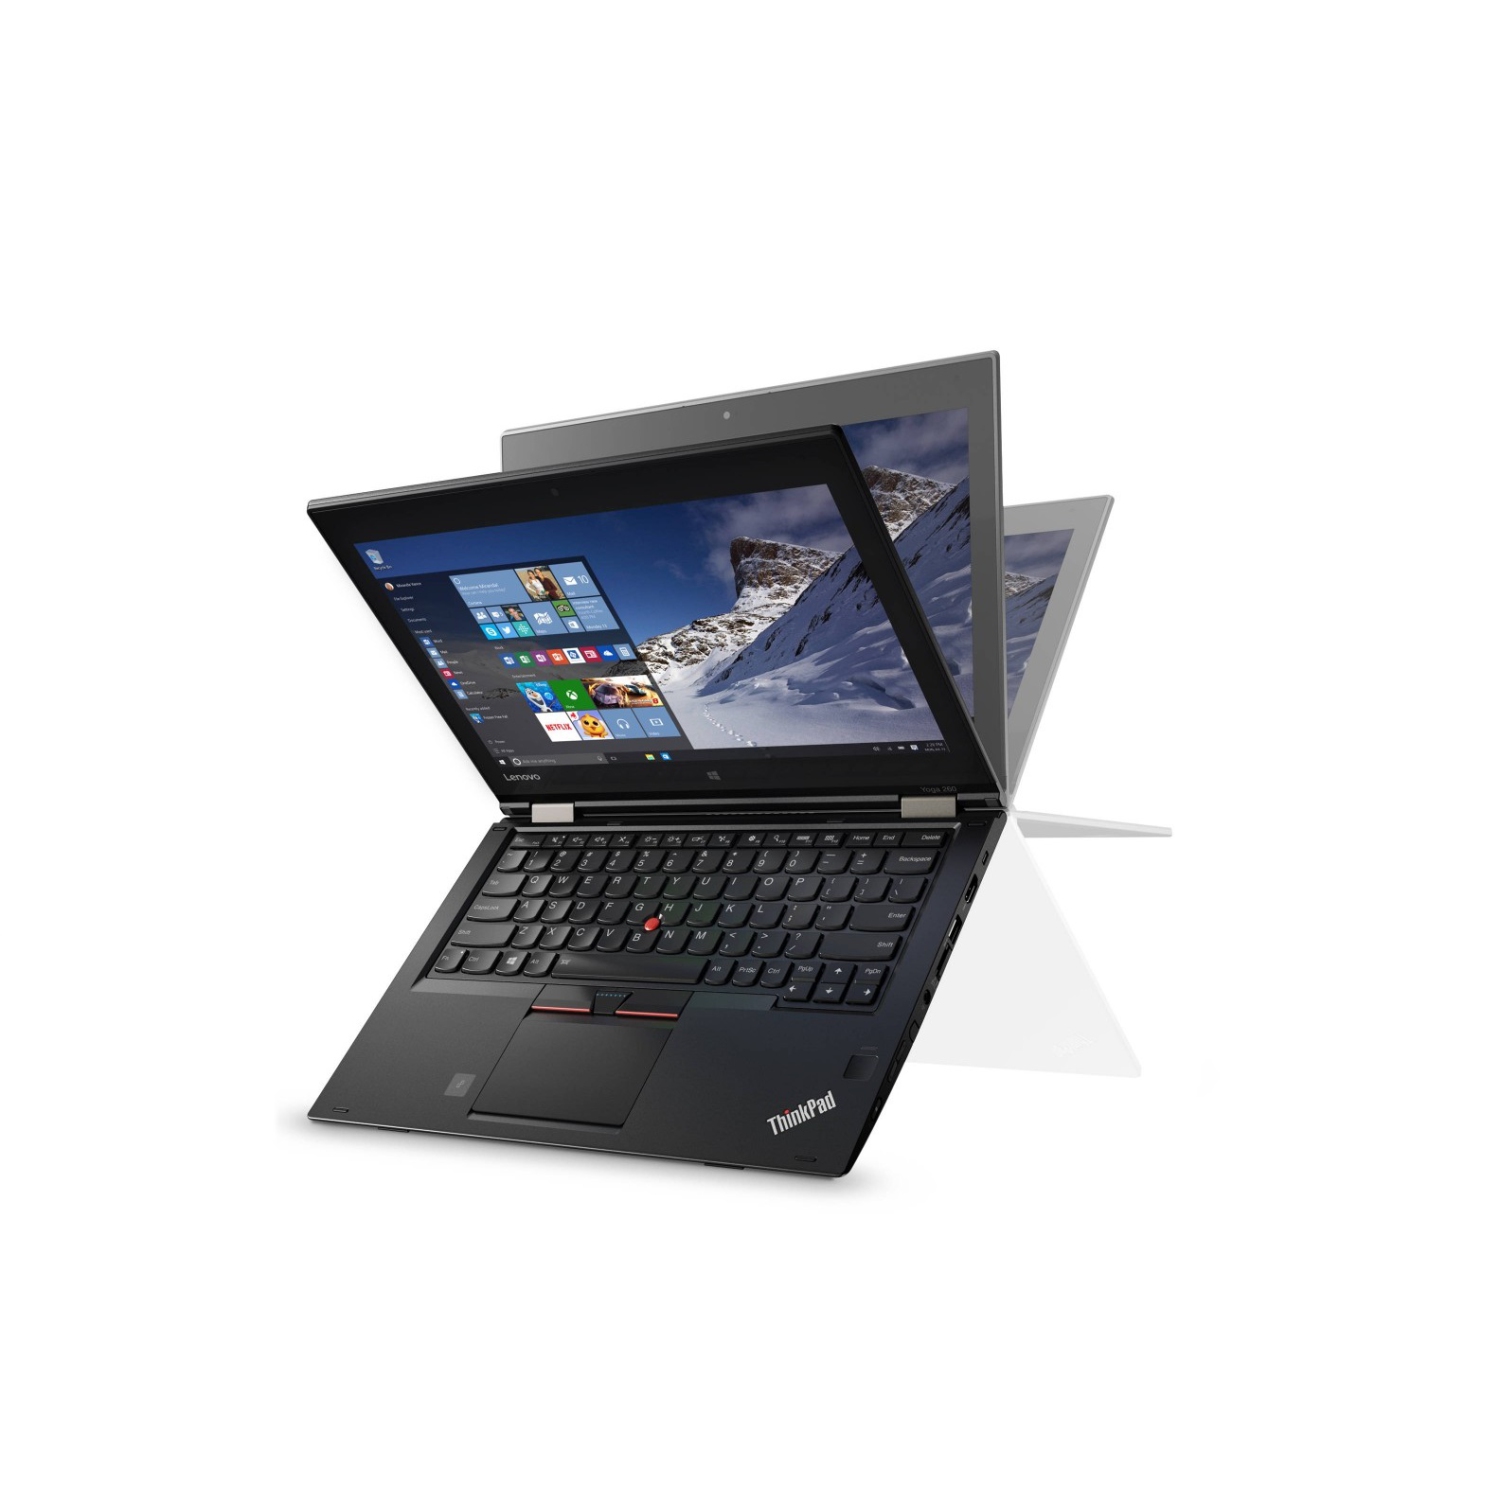 Refurbished (Good) - Lenovo ThinkPad Yoga 260 - i5 (6th Gen) 6300U - 8GB RAM - 1TB NVMe SSD - Intel HD Graphics 520 - Windows 10 Professional - 1 Year Warranty